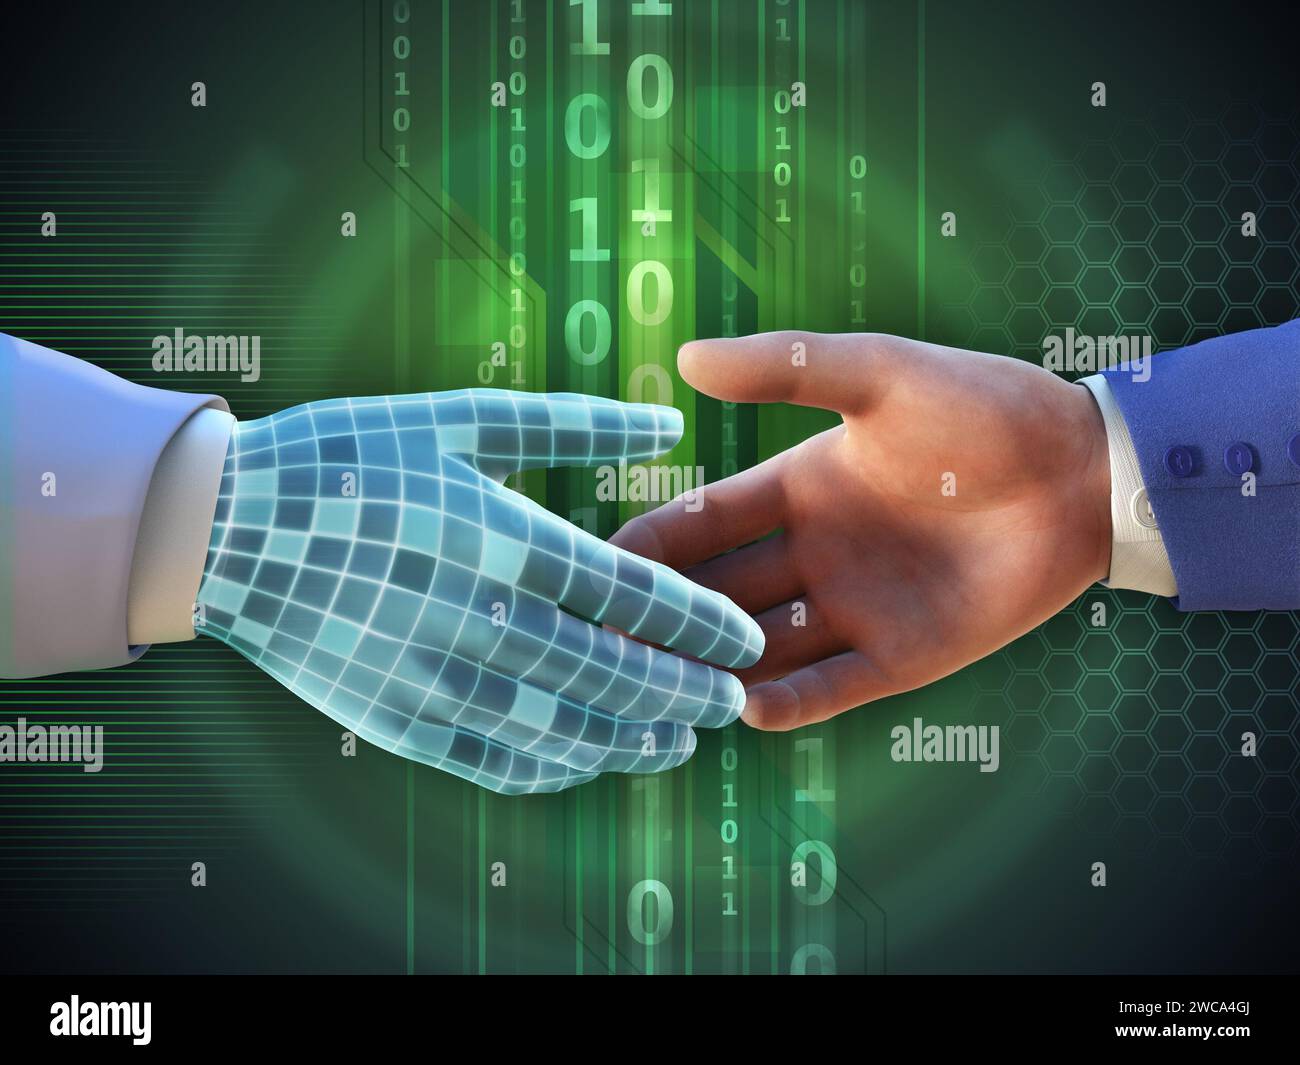 Virtual handshake between two businessmen. Digital illustration. Stock Photo